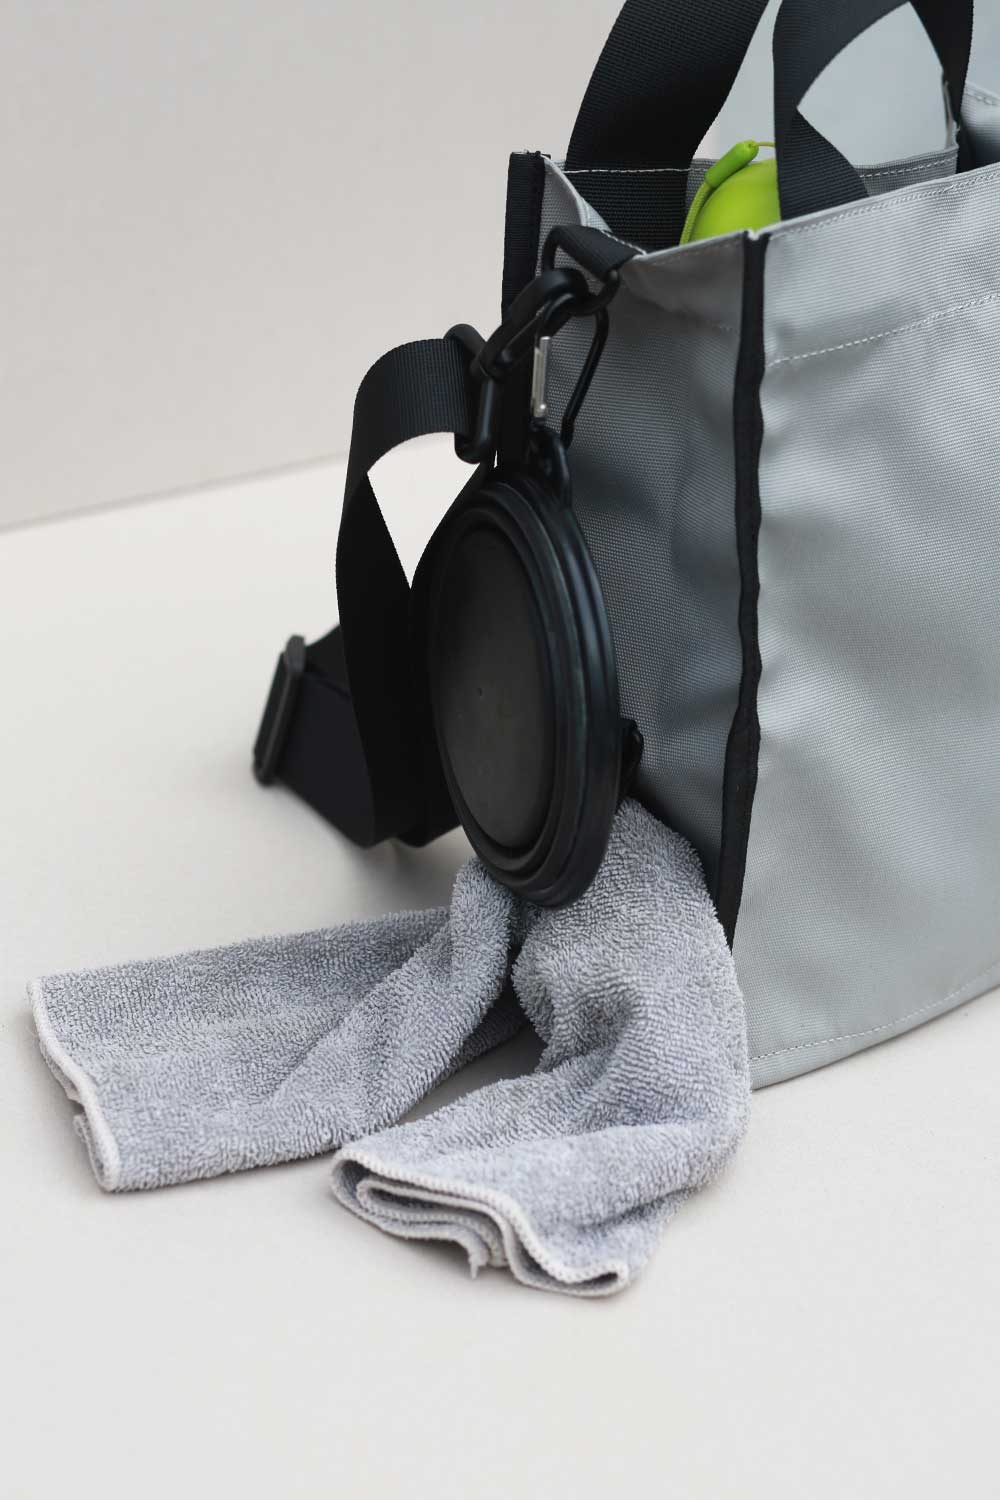 Basic Dog Walking Bag - Water resistance - 3 Ways Multifunction - Poop Bag Keyring Towel Holder